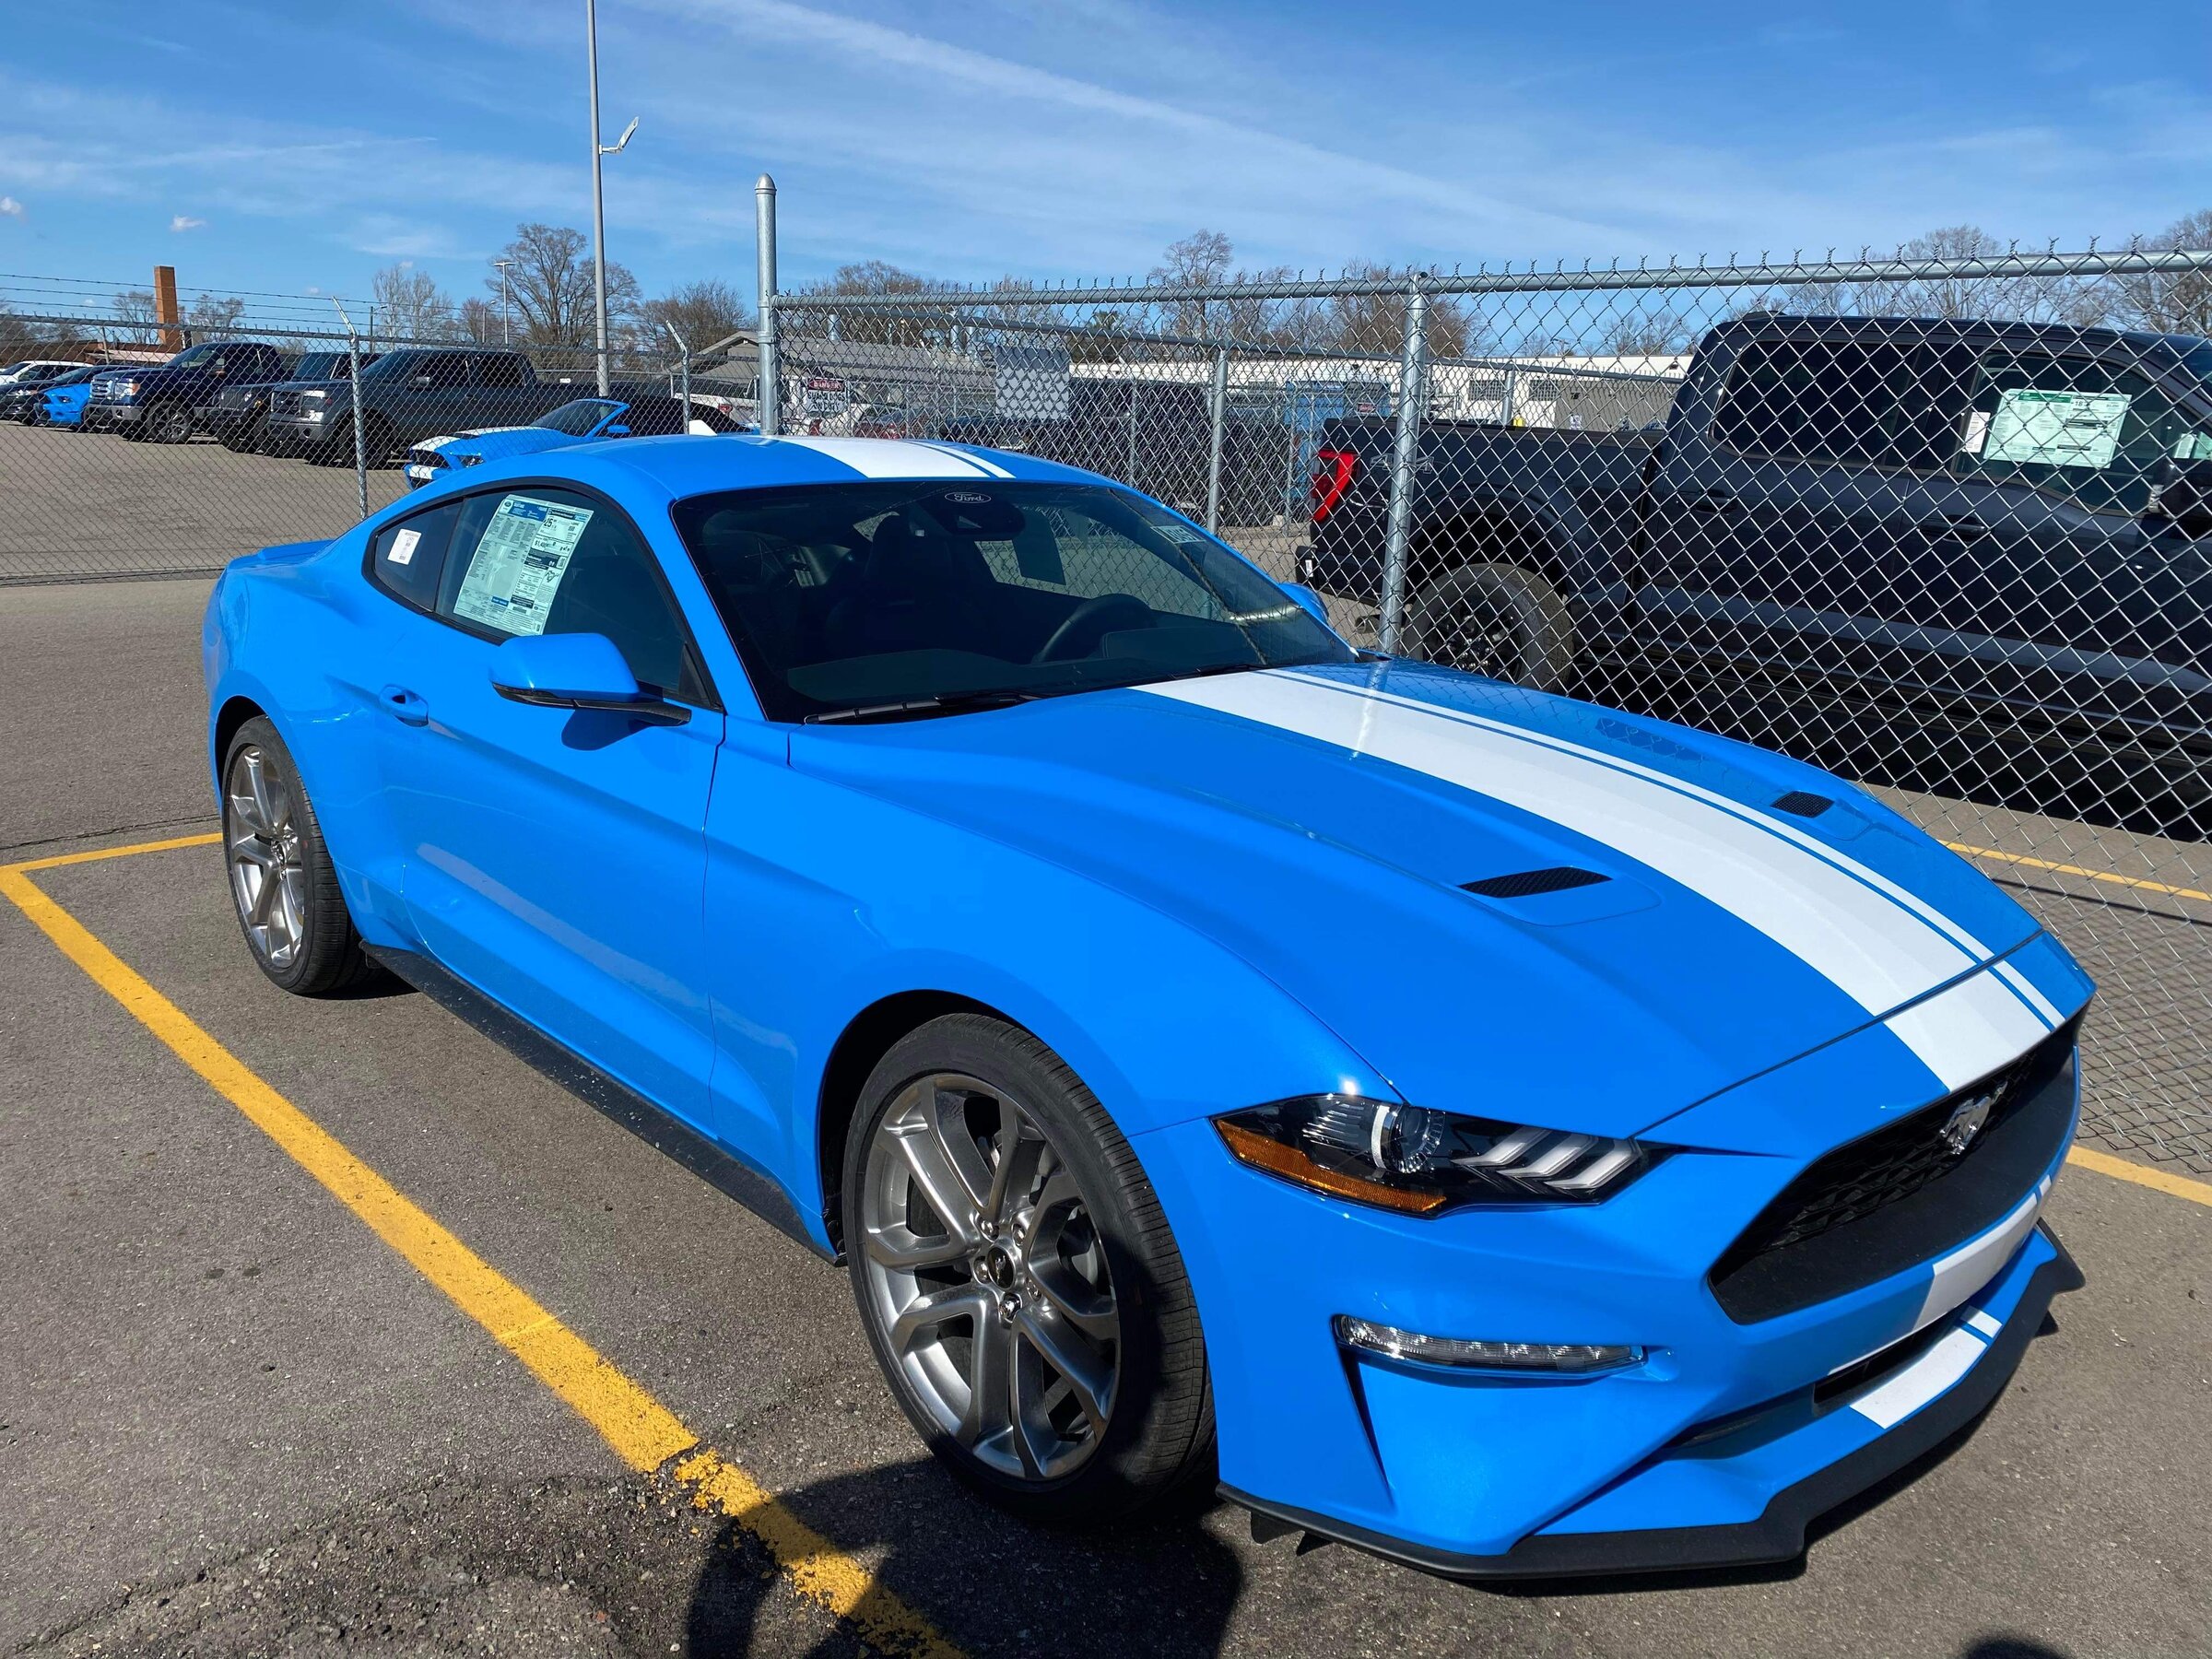 2022 Grabber Blue METALLIC in the sun! 2015+ S550 Mustang Forum (GT